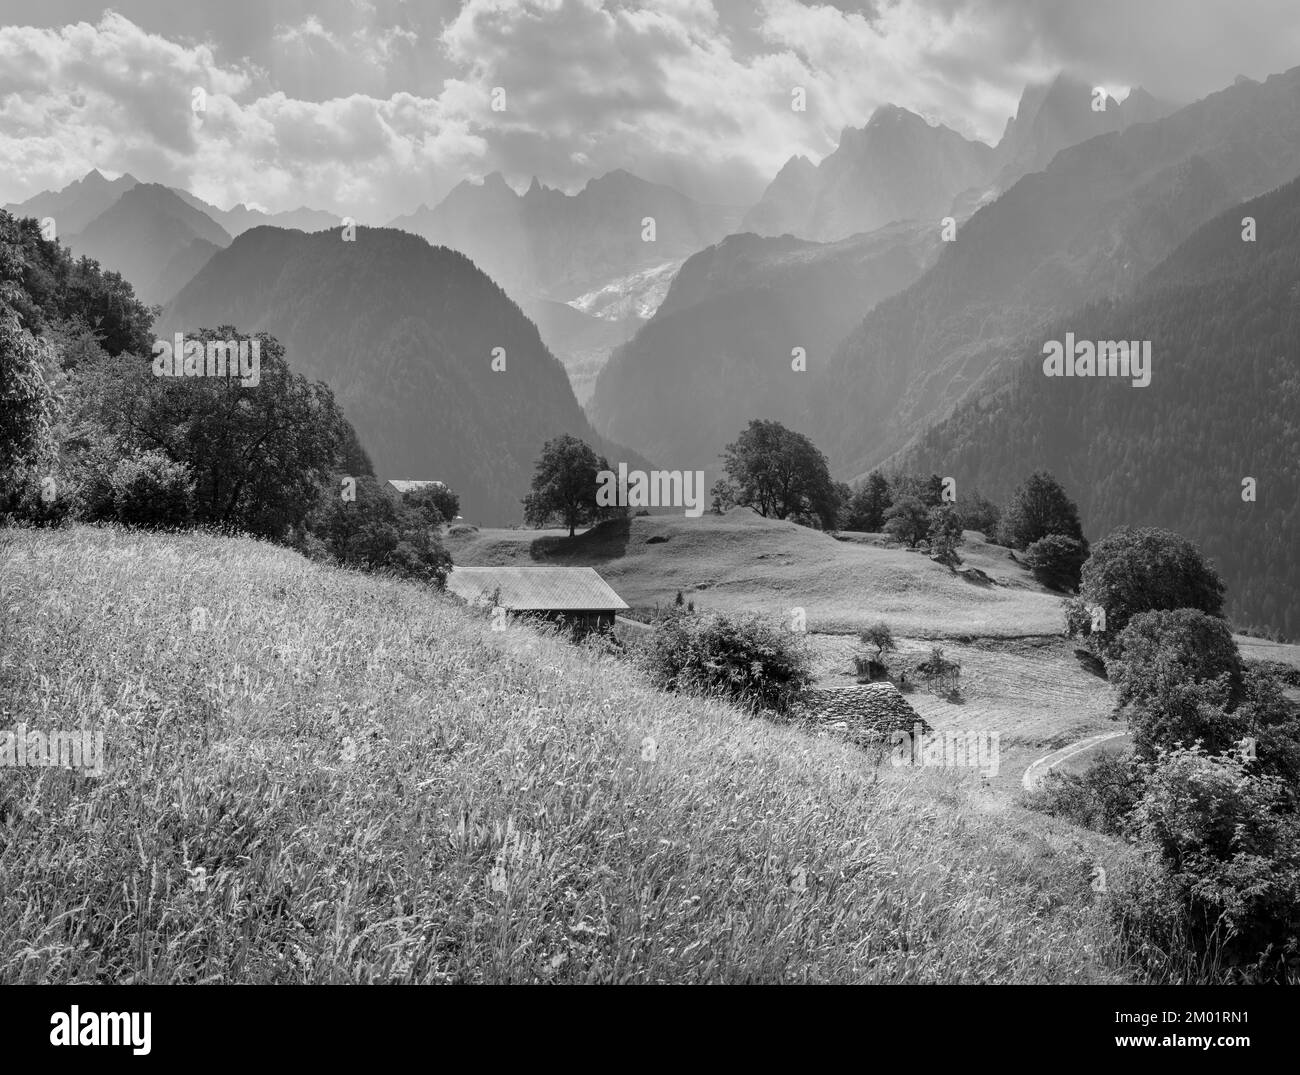 The Piz Badile, Pizzo Cengalo, and Sciora peaks in the Bregaglia range - Switzerland. Stock Photo